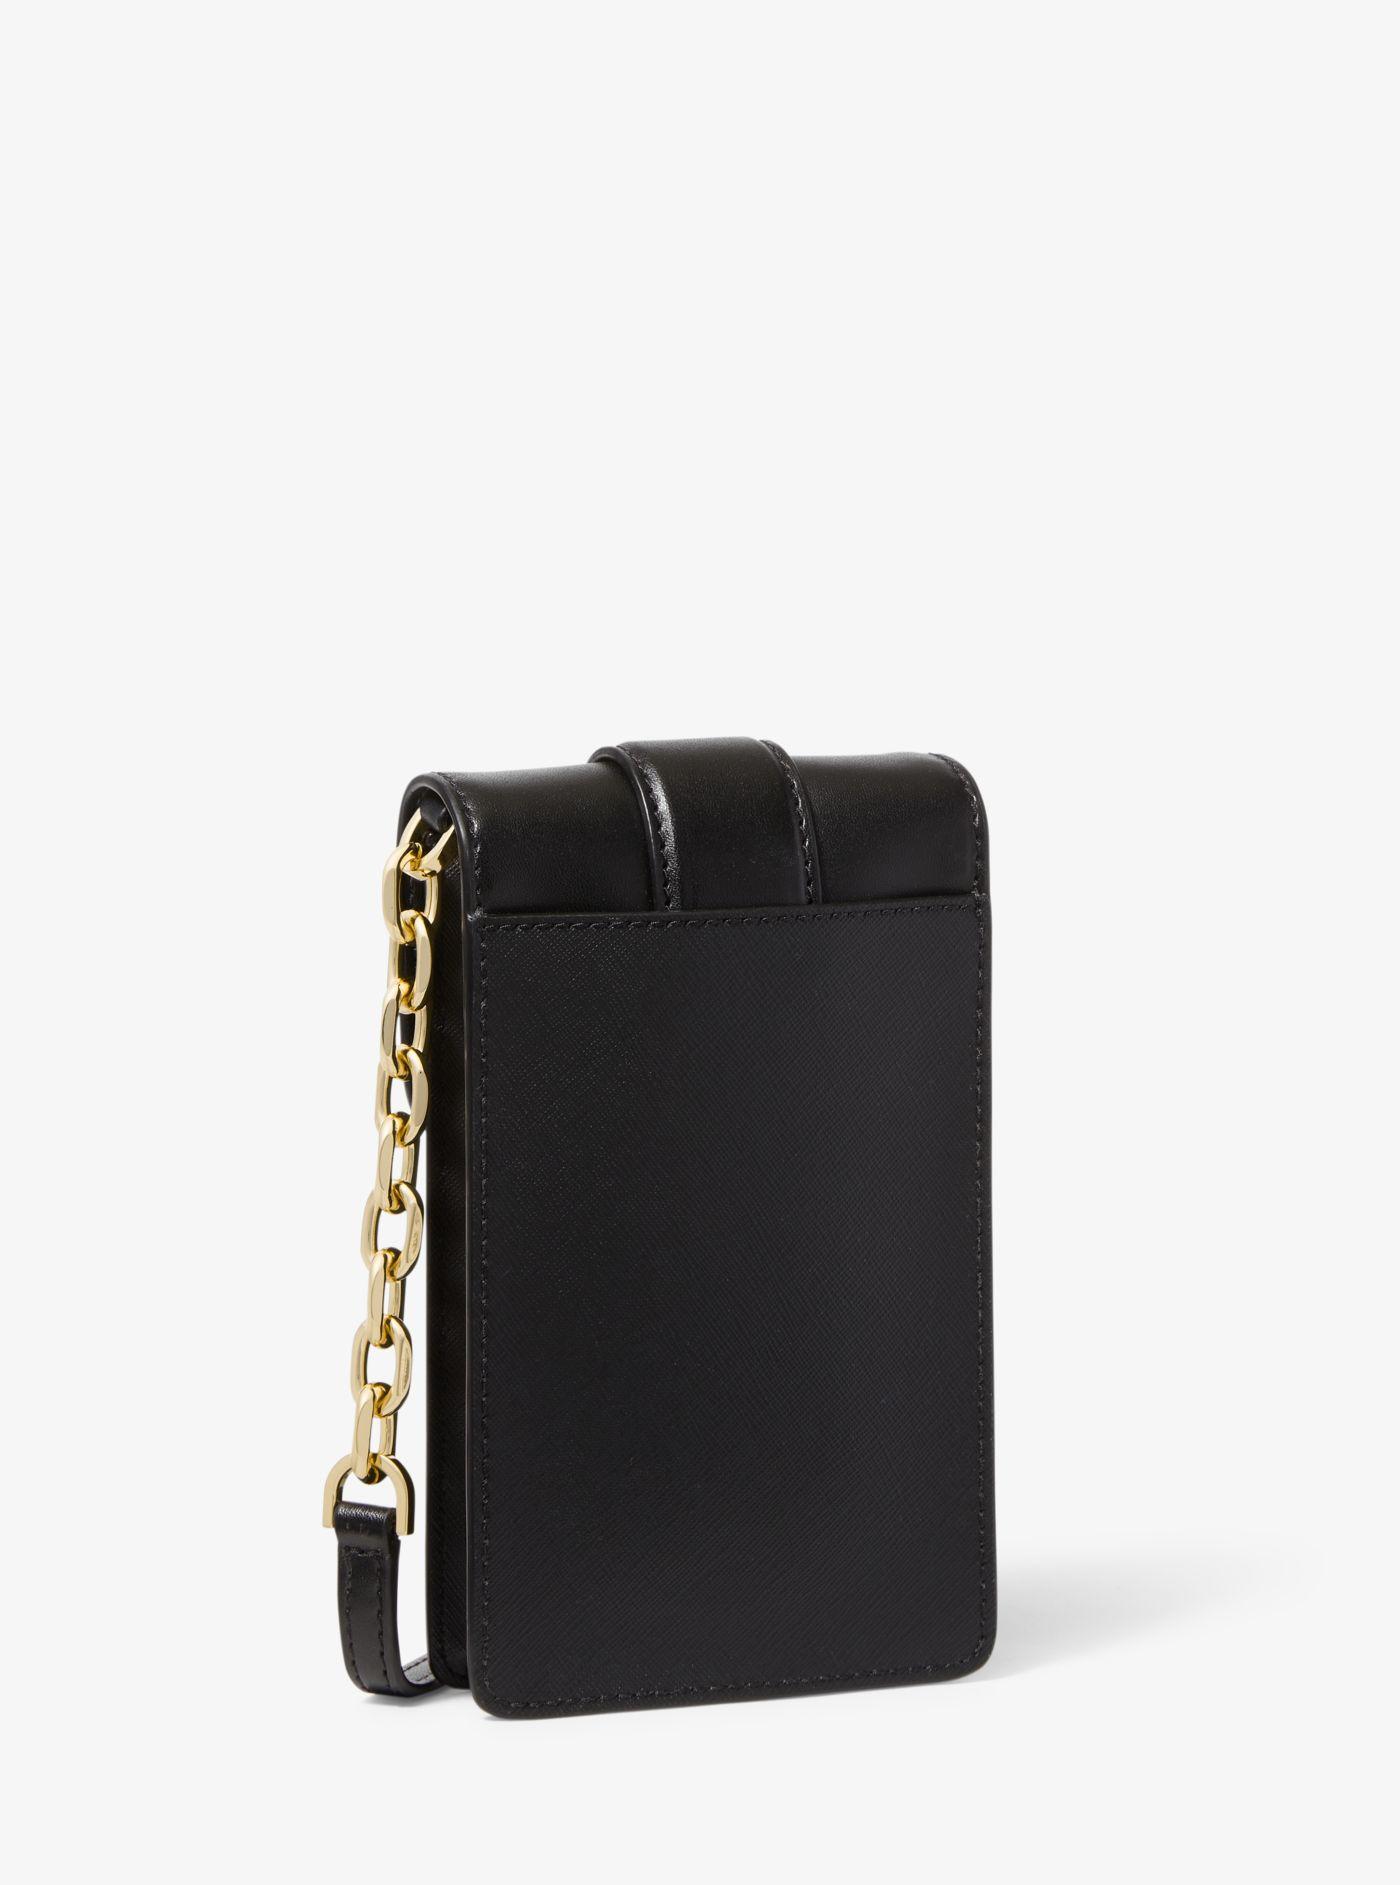 Michael Kors Carmen Small Faux Leather Phone Crossbody Bag in Black | Lyst